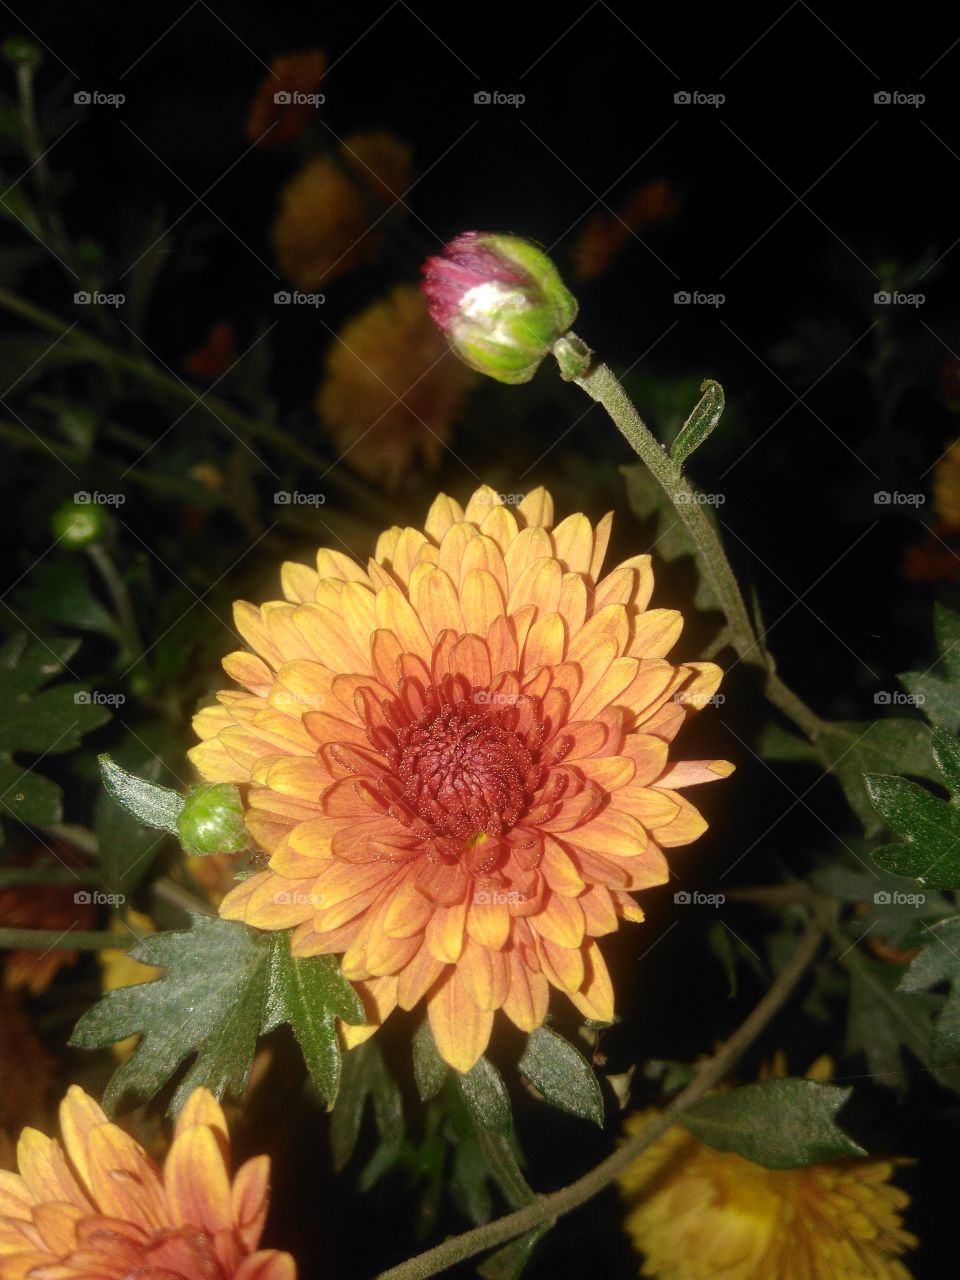 Dual colored flowers
orange chrysanthemum